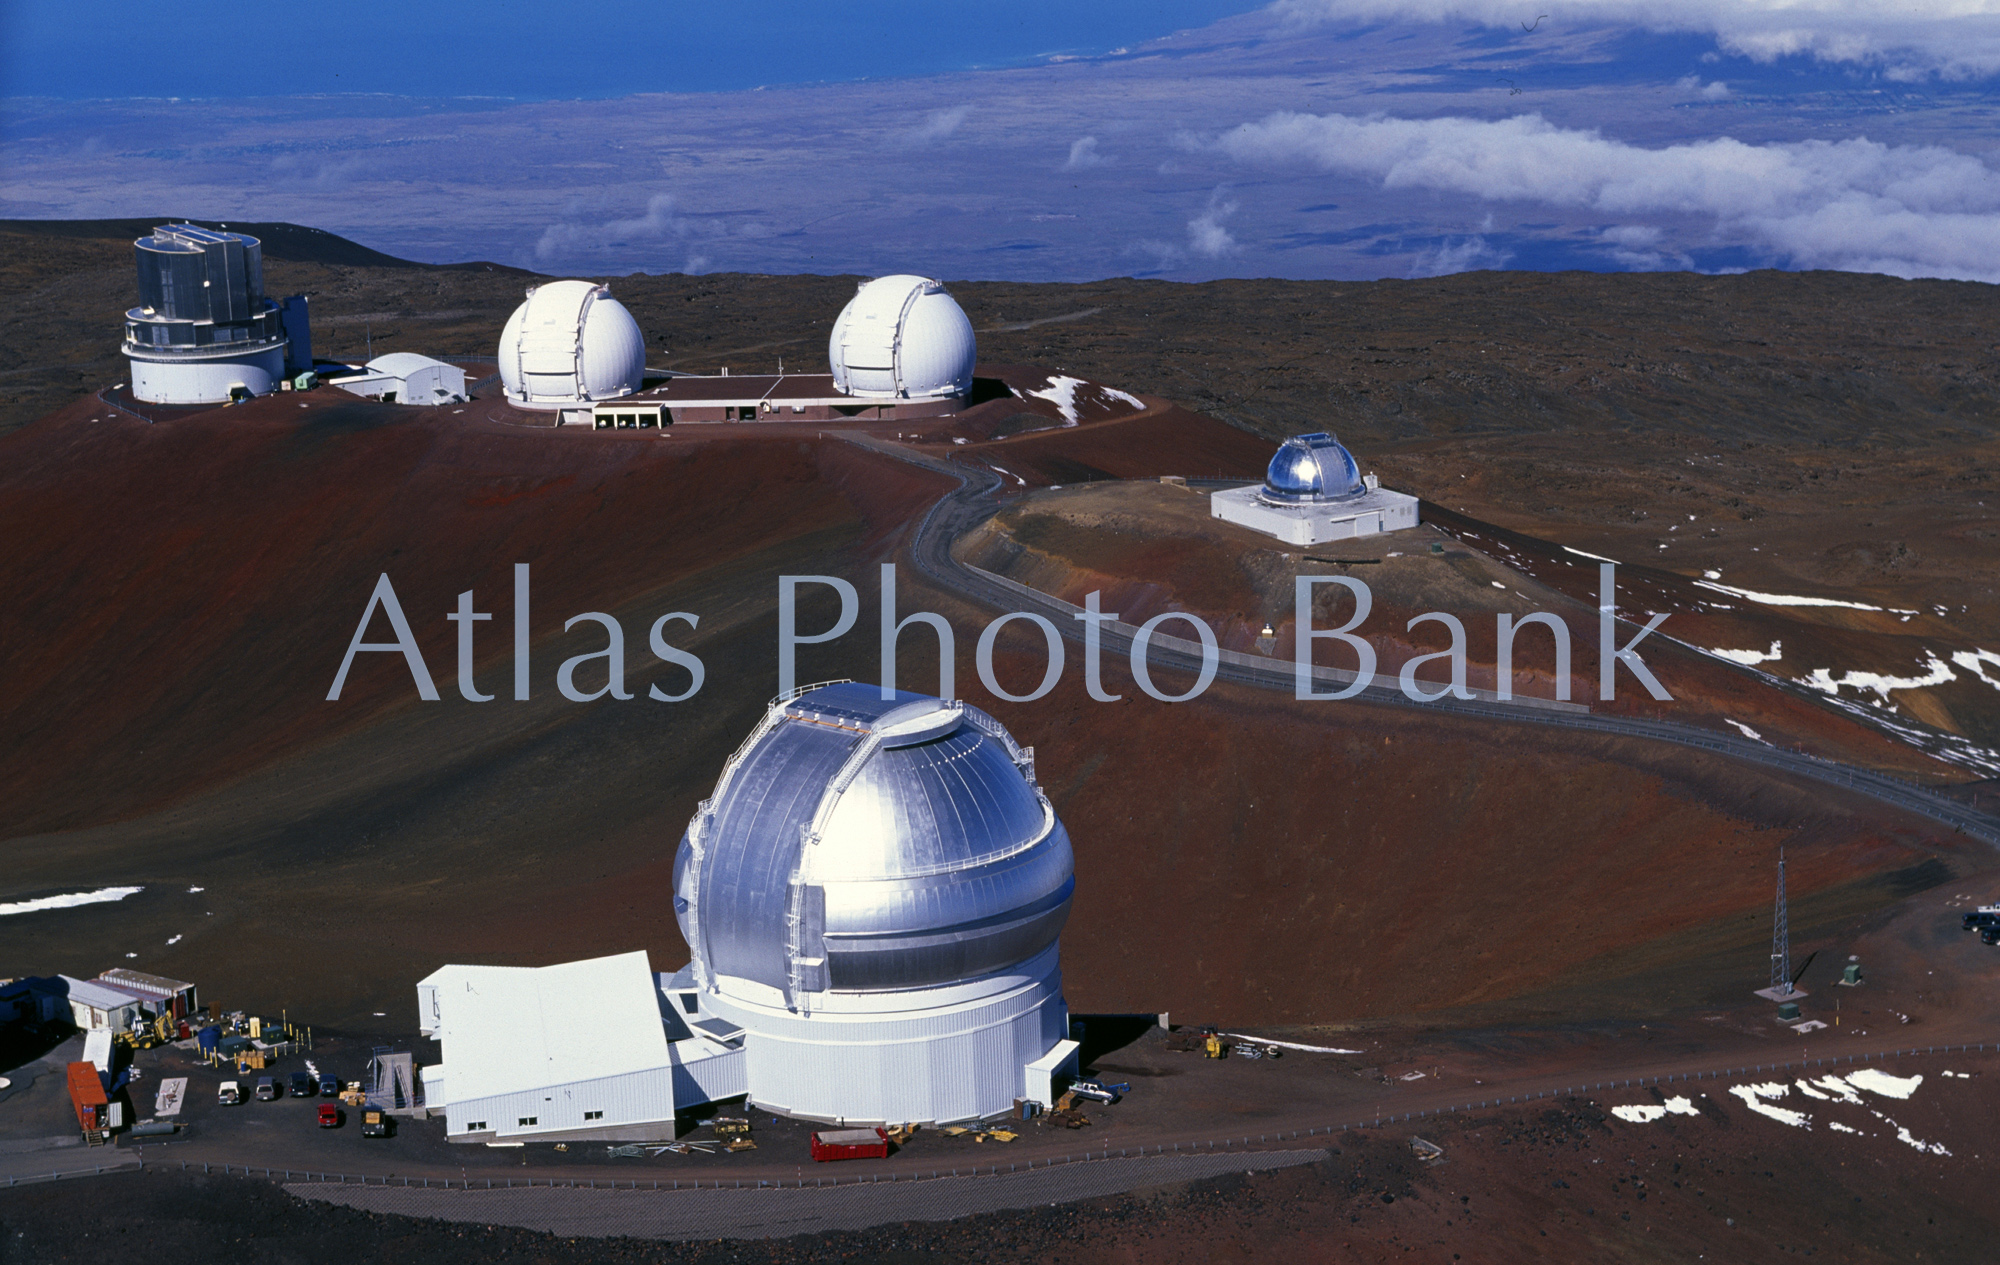 OTP-013-マウナケア天文台群（すばる望遠鏡・ケック望遠鏡・NASA赤外線望遠鏡など）